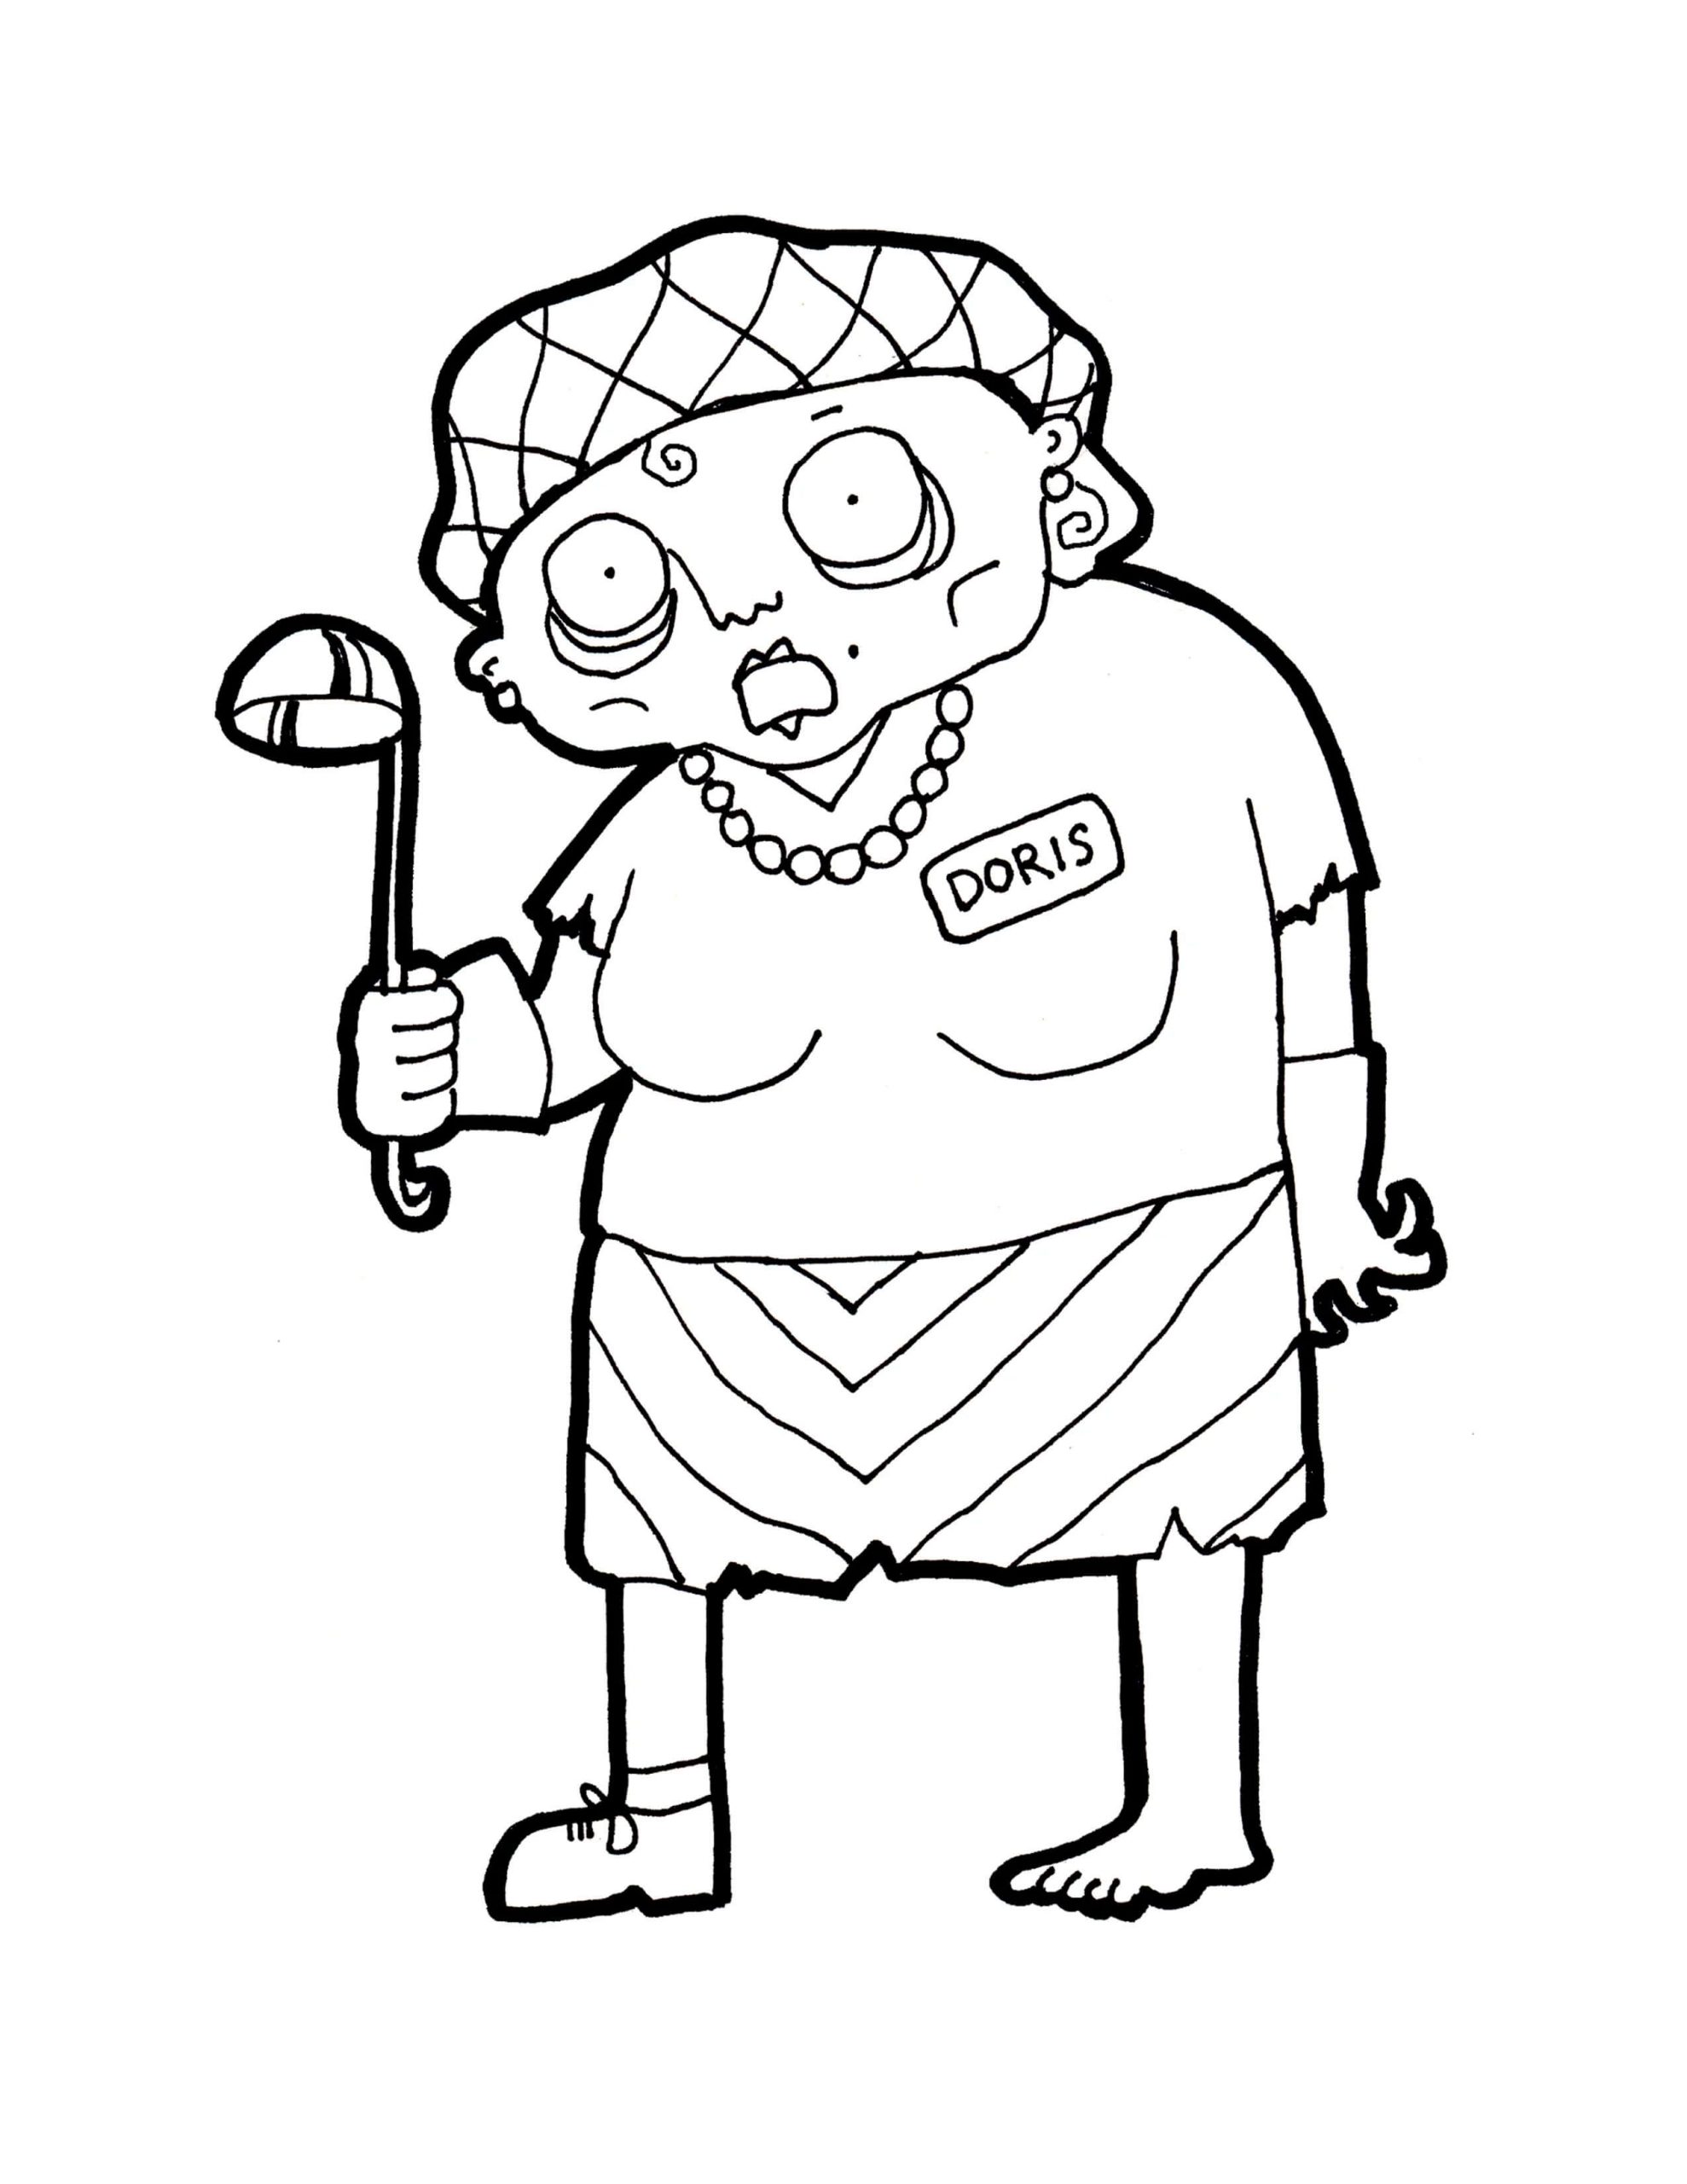 Målarbild Zombie Mormor